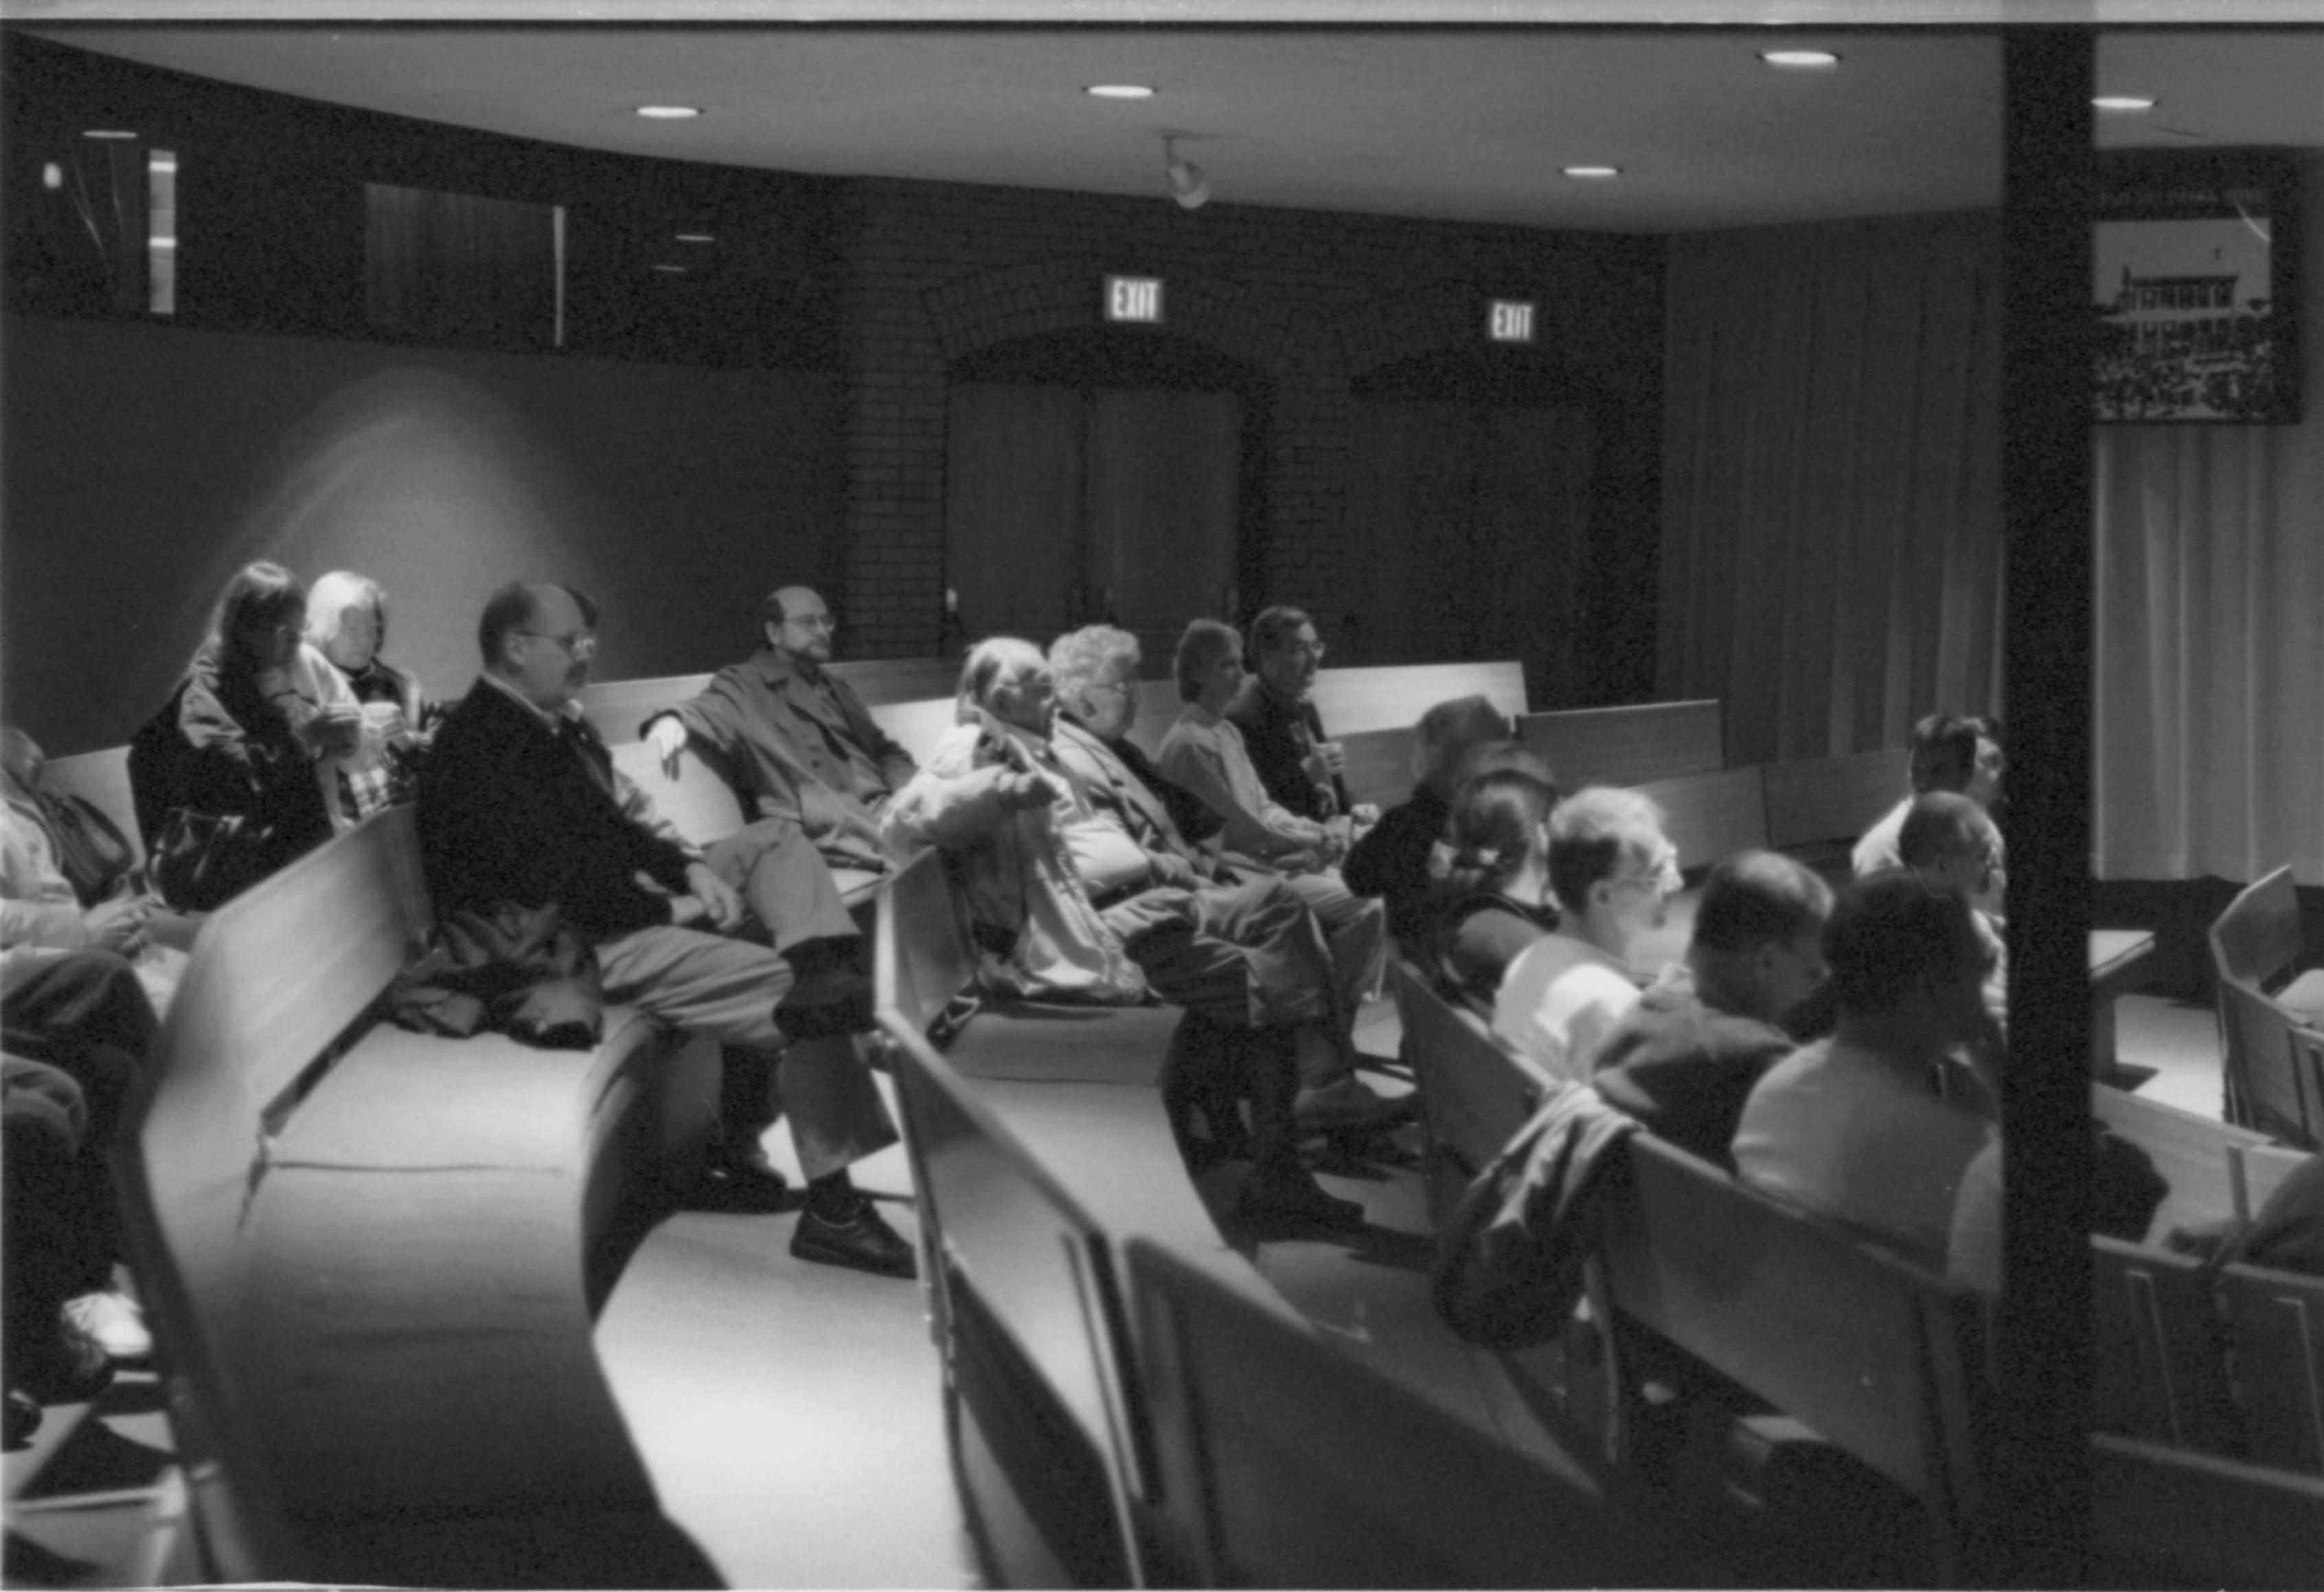 Visitors seated in theater I. 3-1997 Colloq (b/w); 20 Colloquium, 1997